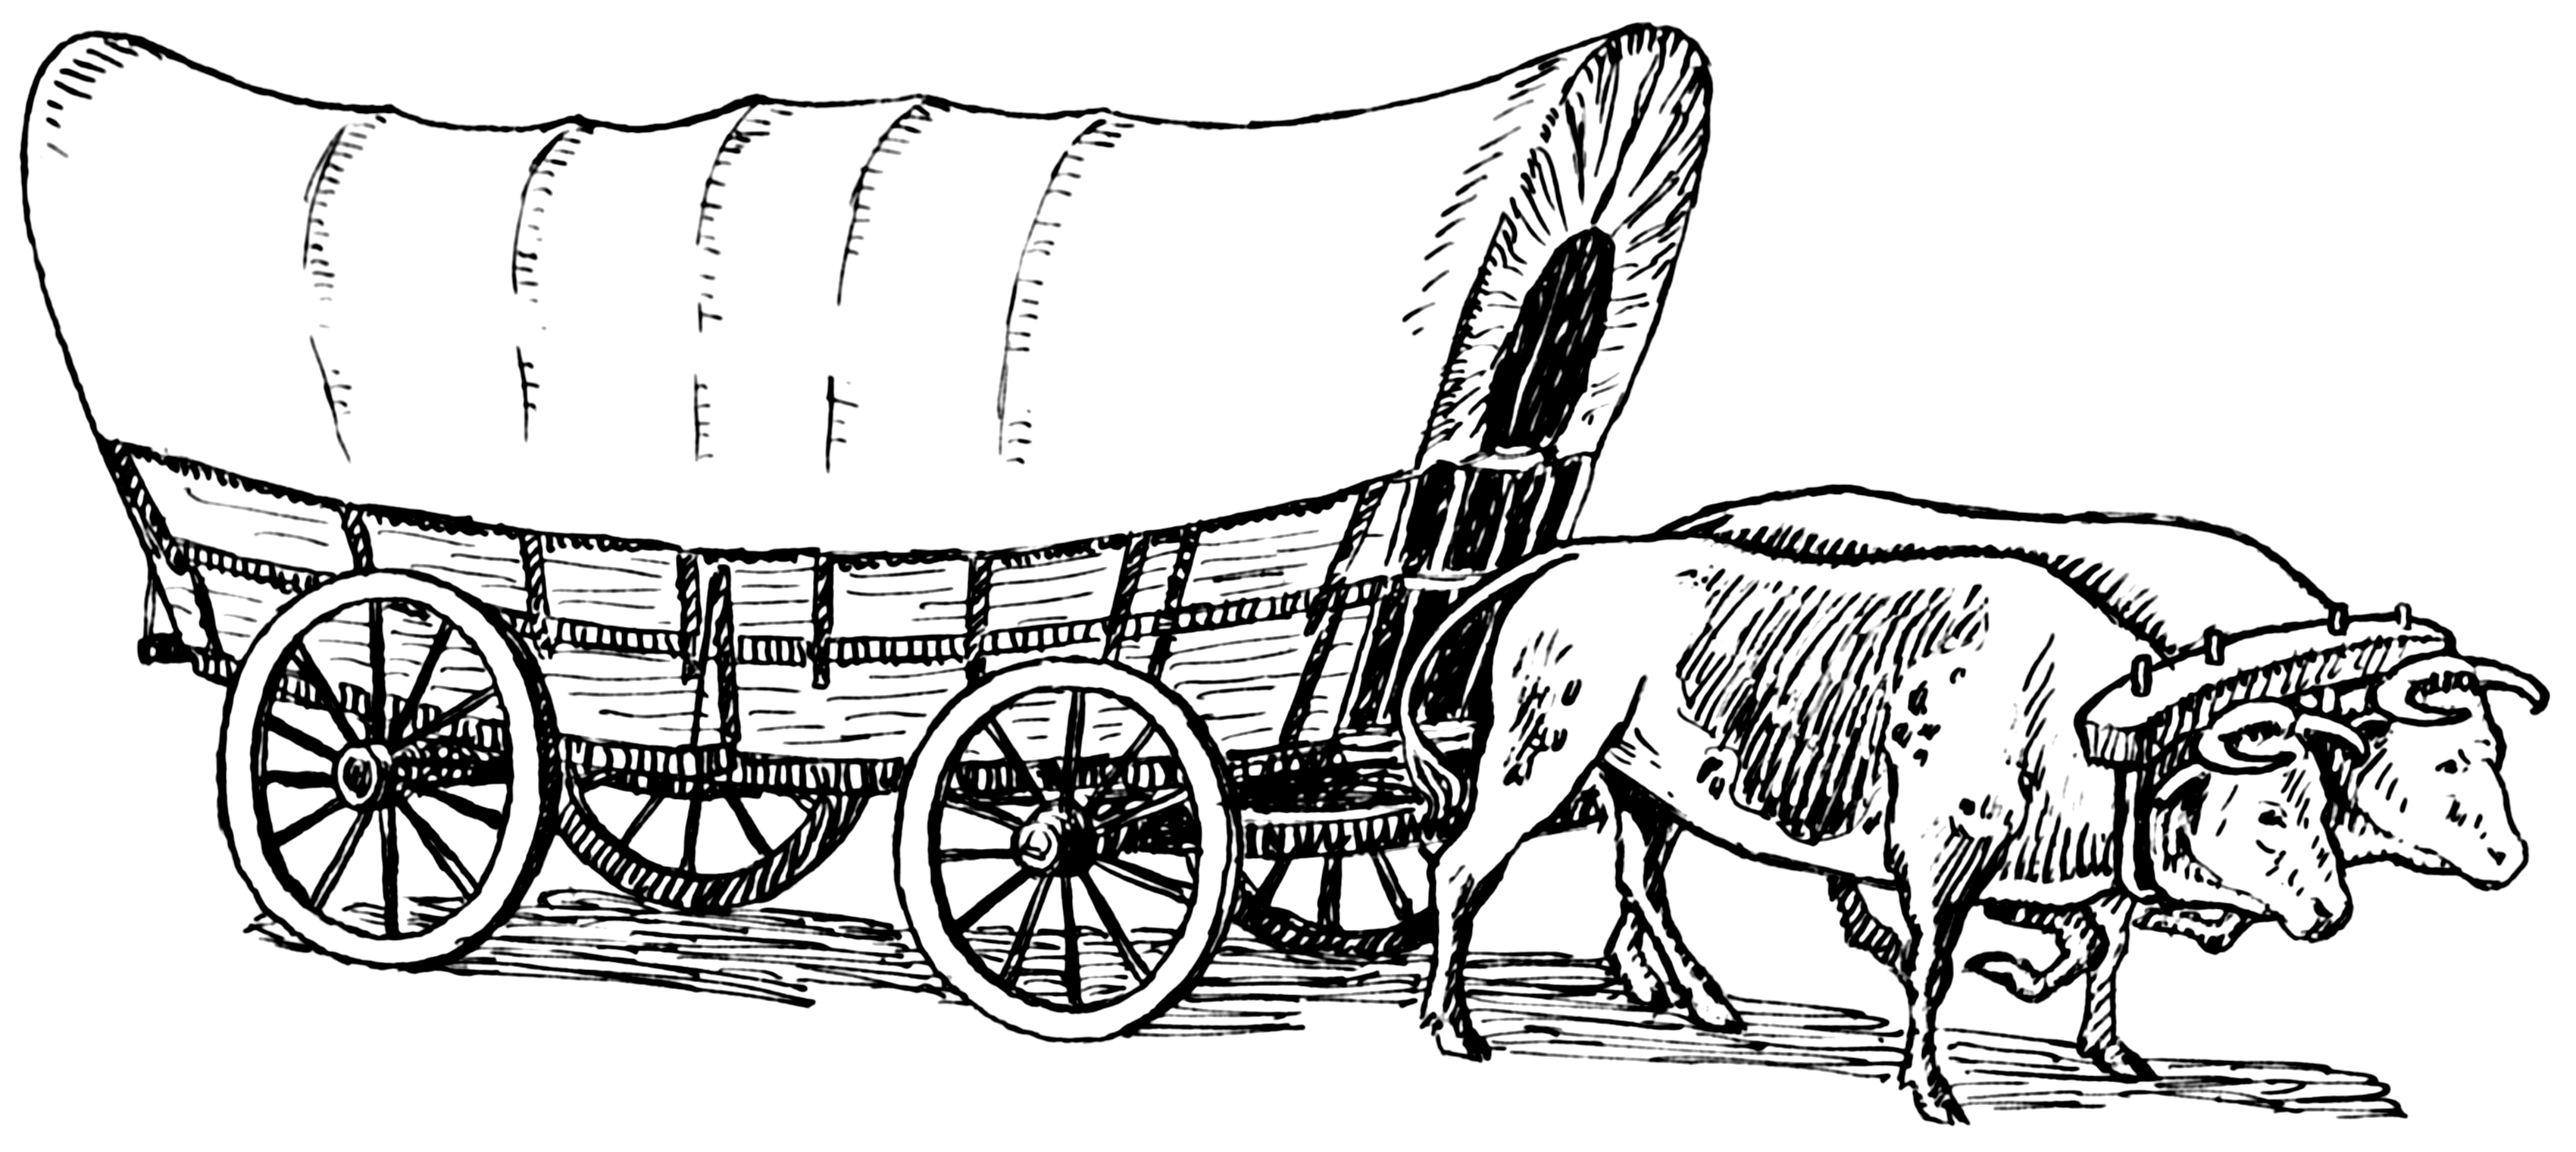 pioneer clipart horse drawn wagon